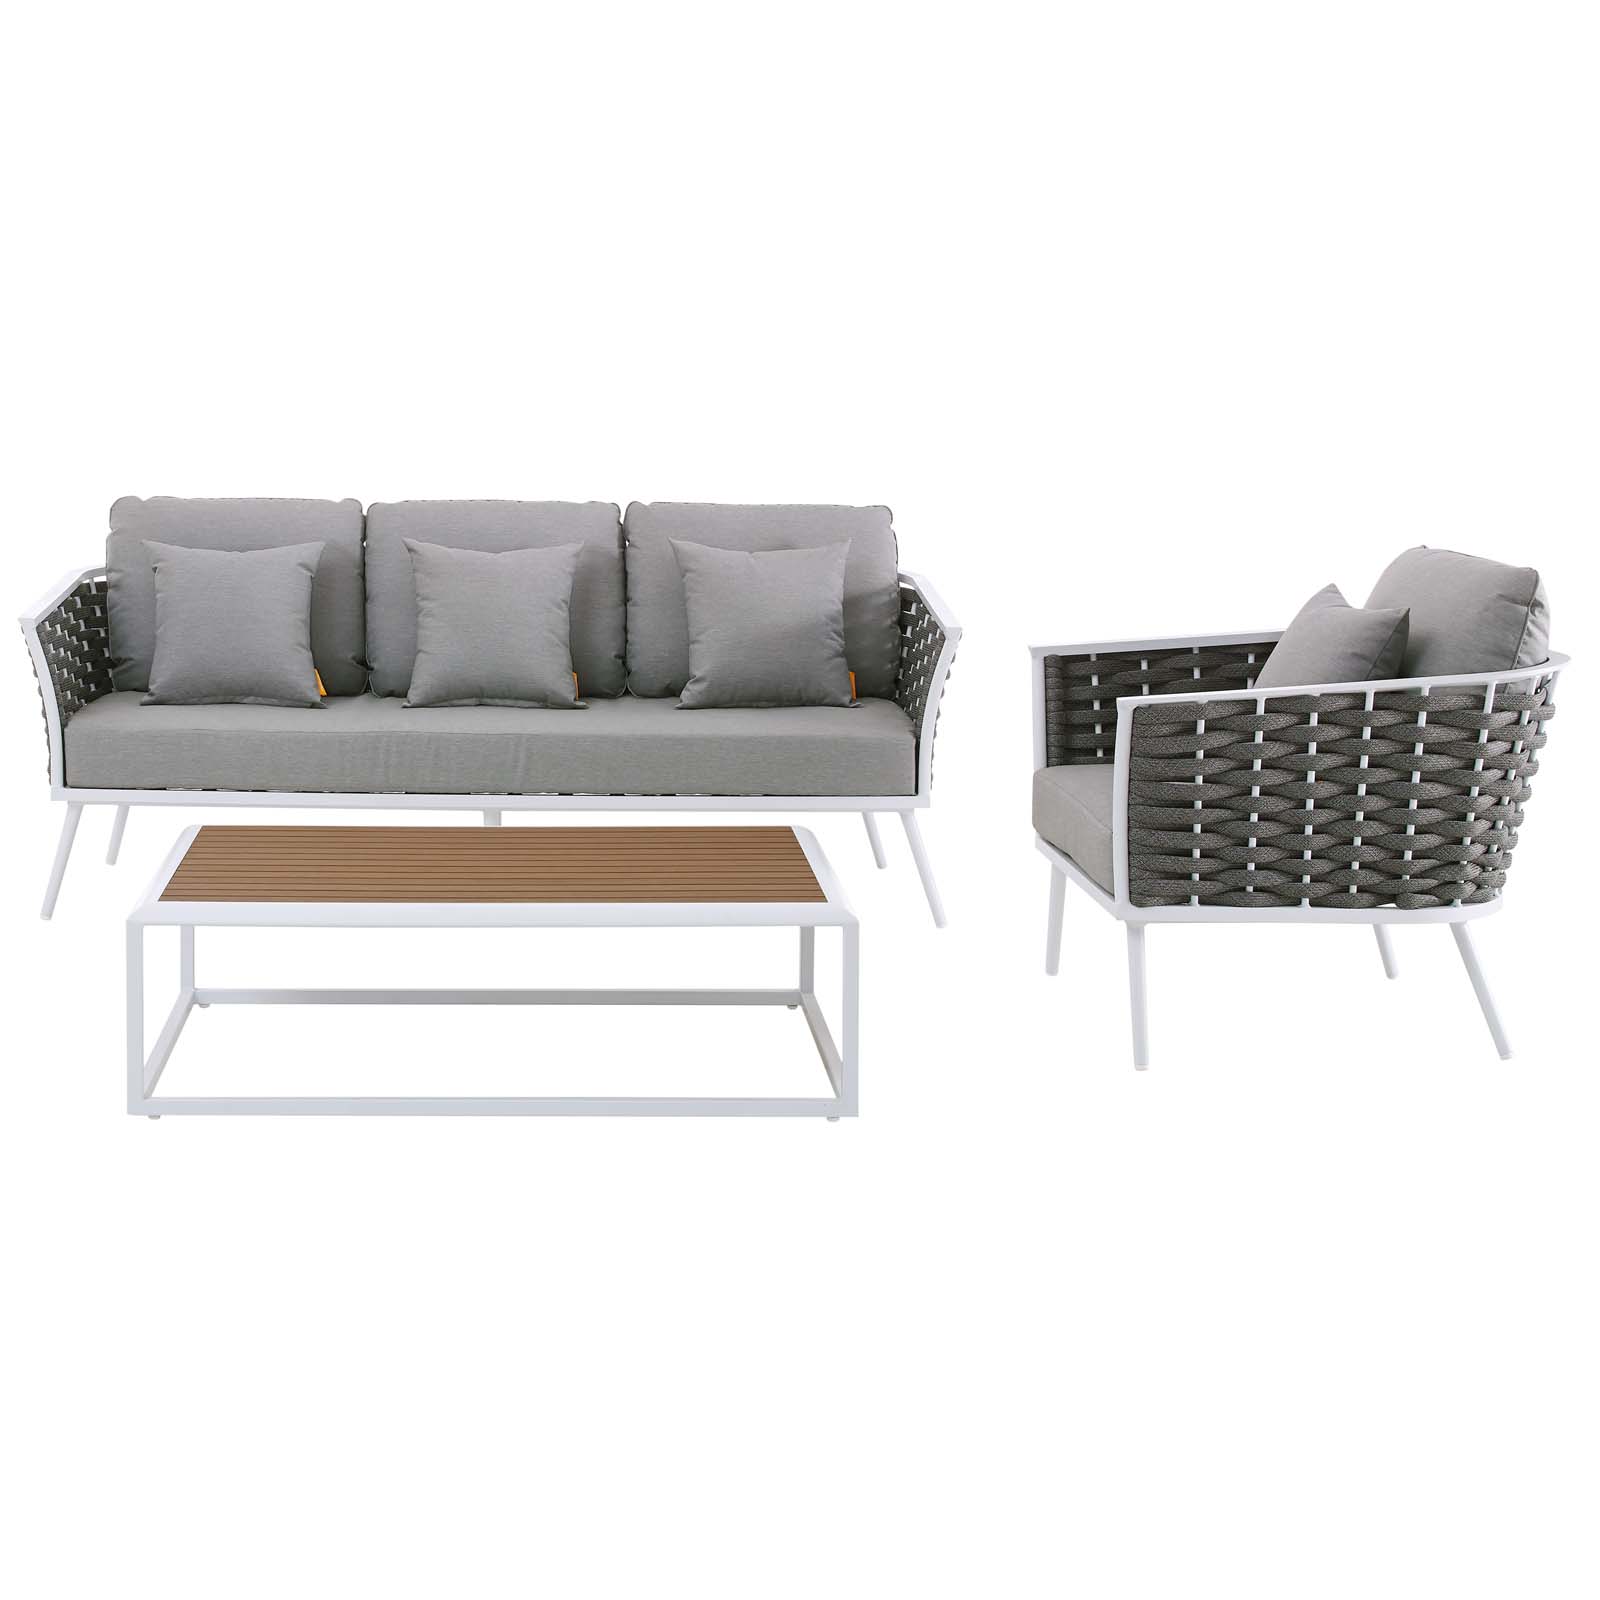 Modern Contemporary Urban Outdoor Patio Balcony Garden Furniture Lounge Chair, Sofa and Table Set, Fabric Aluminium, White Grey Gray - image 4 of 8